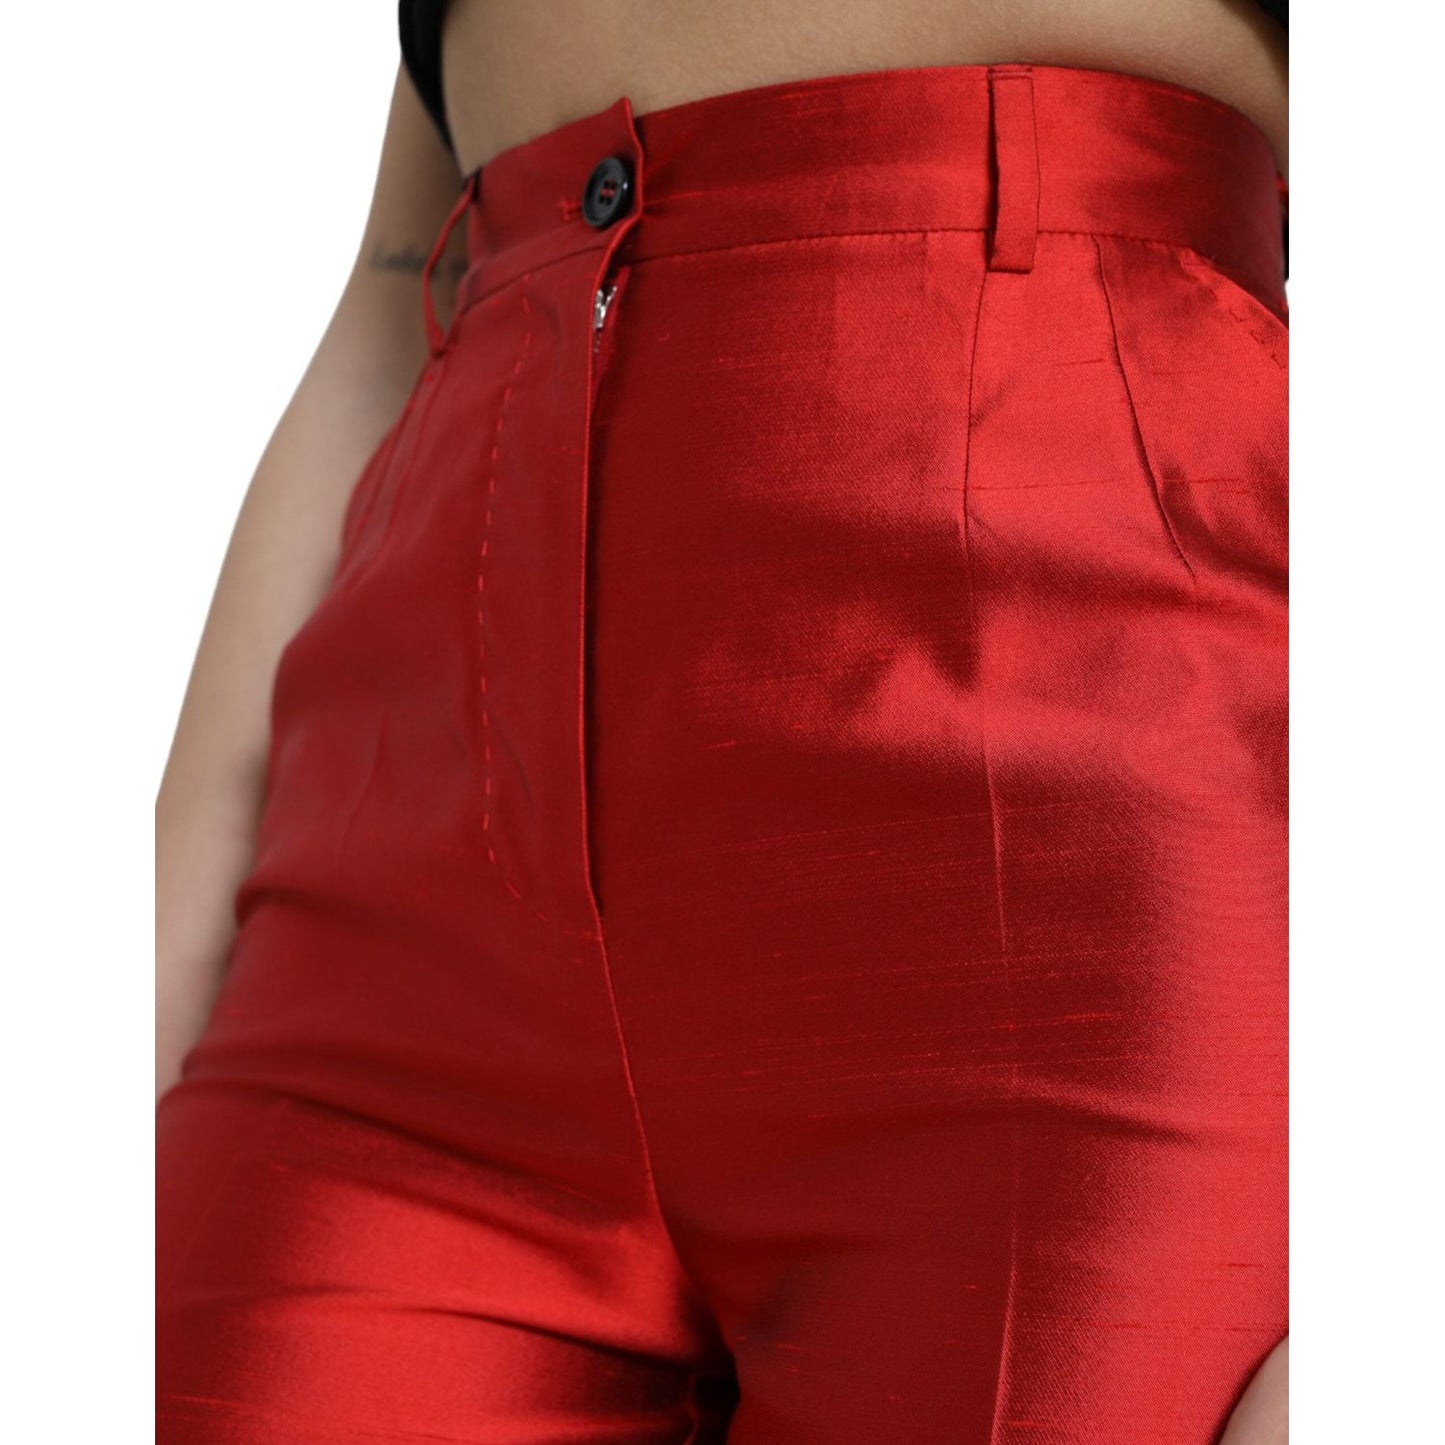 Dolce & Gabbana Elegant High Waist Wide Leg Silk Pants red-satin-silk-high-waist-wide-leg-pants 465A1612-BG-scaled-e8fd6f10-c02.jpg